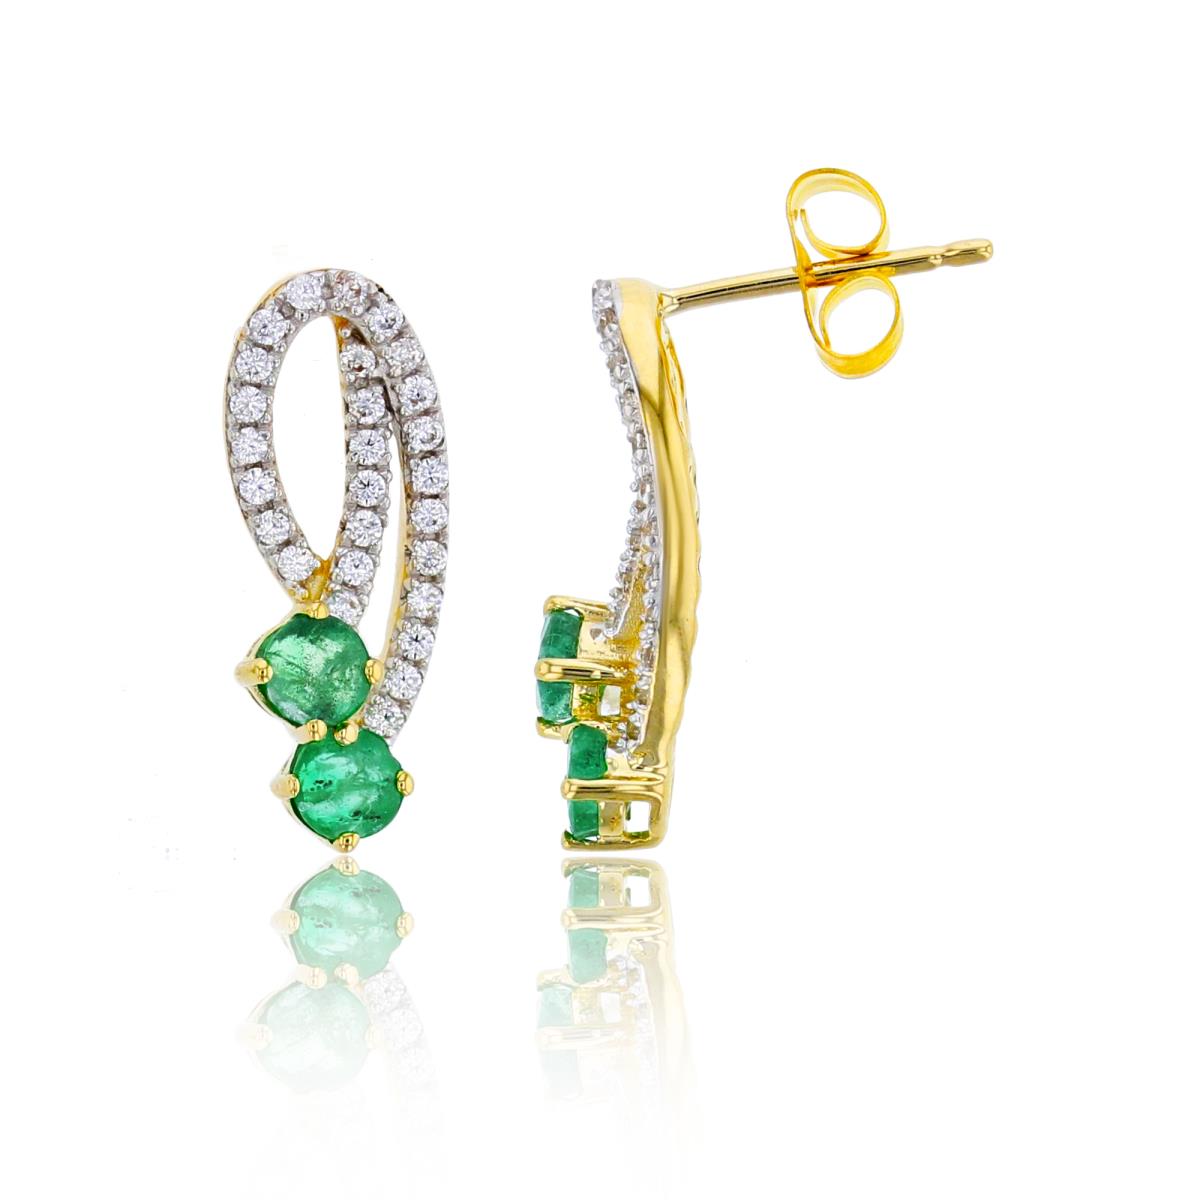 10K Yellow Gold 0.32cttw Rnd Diamonds & 3mm Rnd Emerald Fashion Earrins